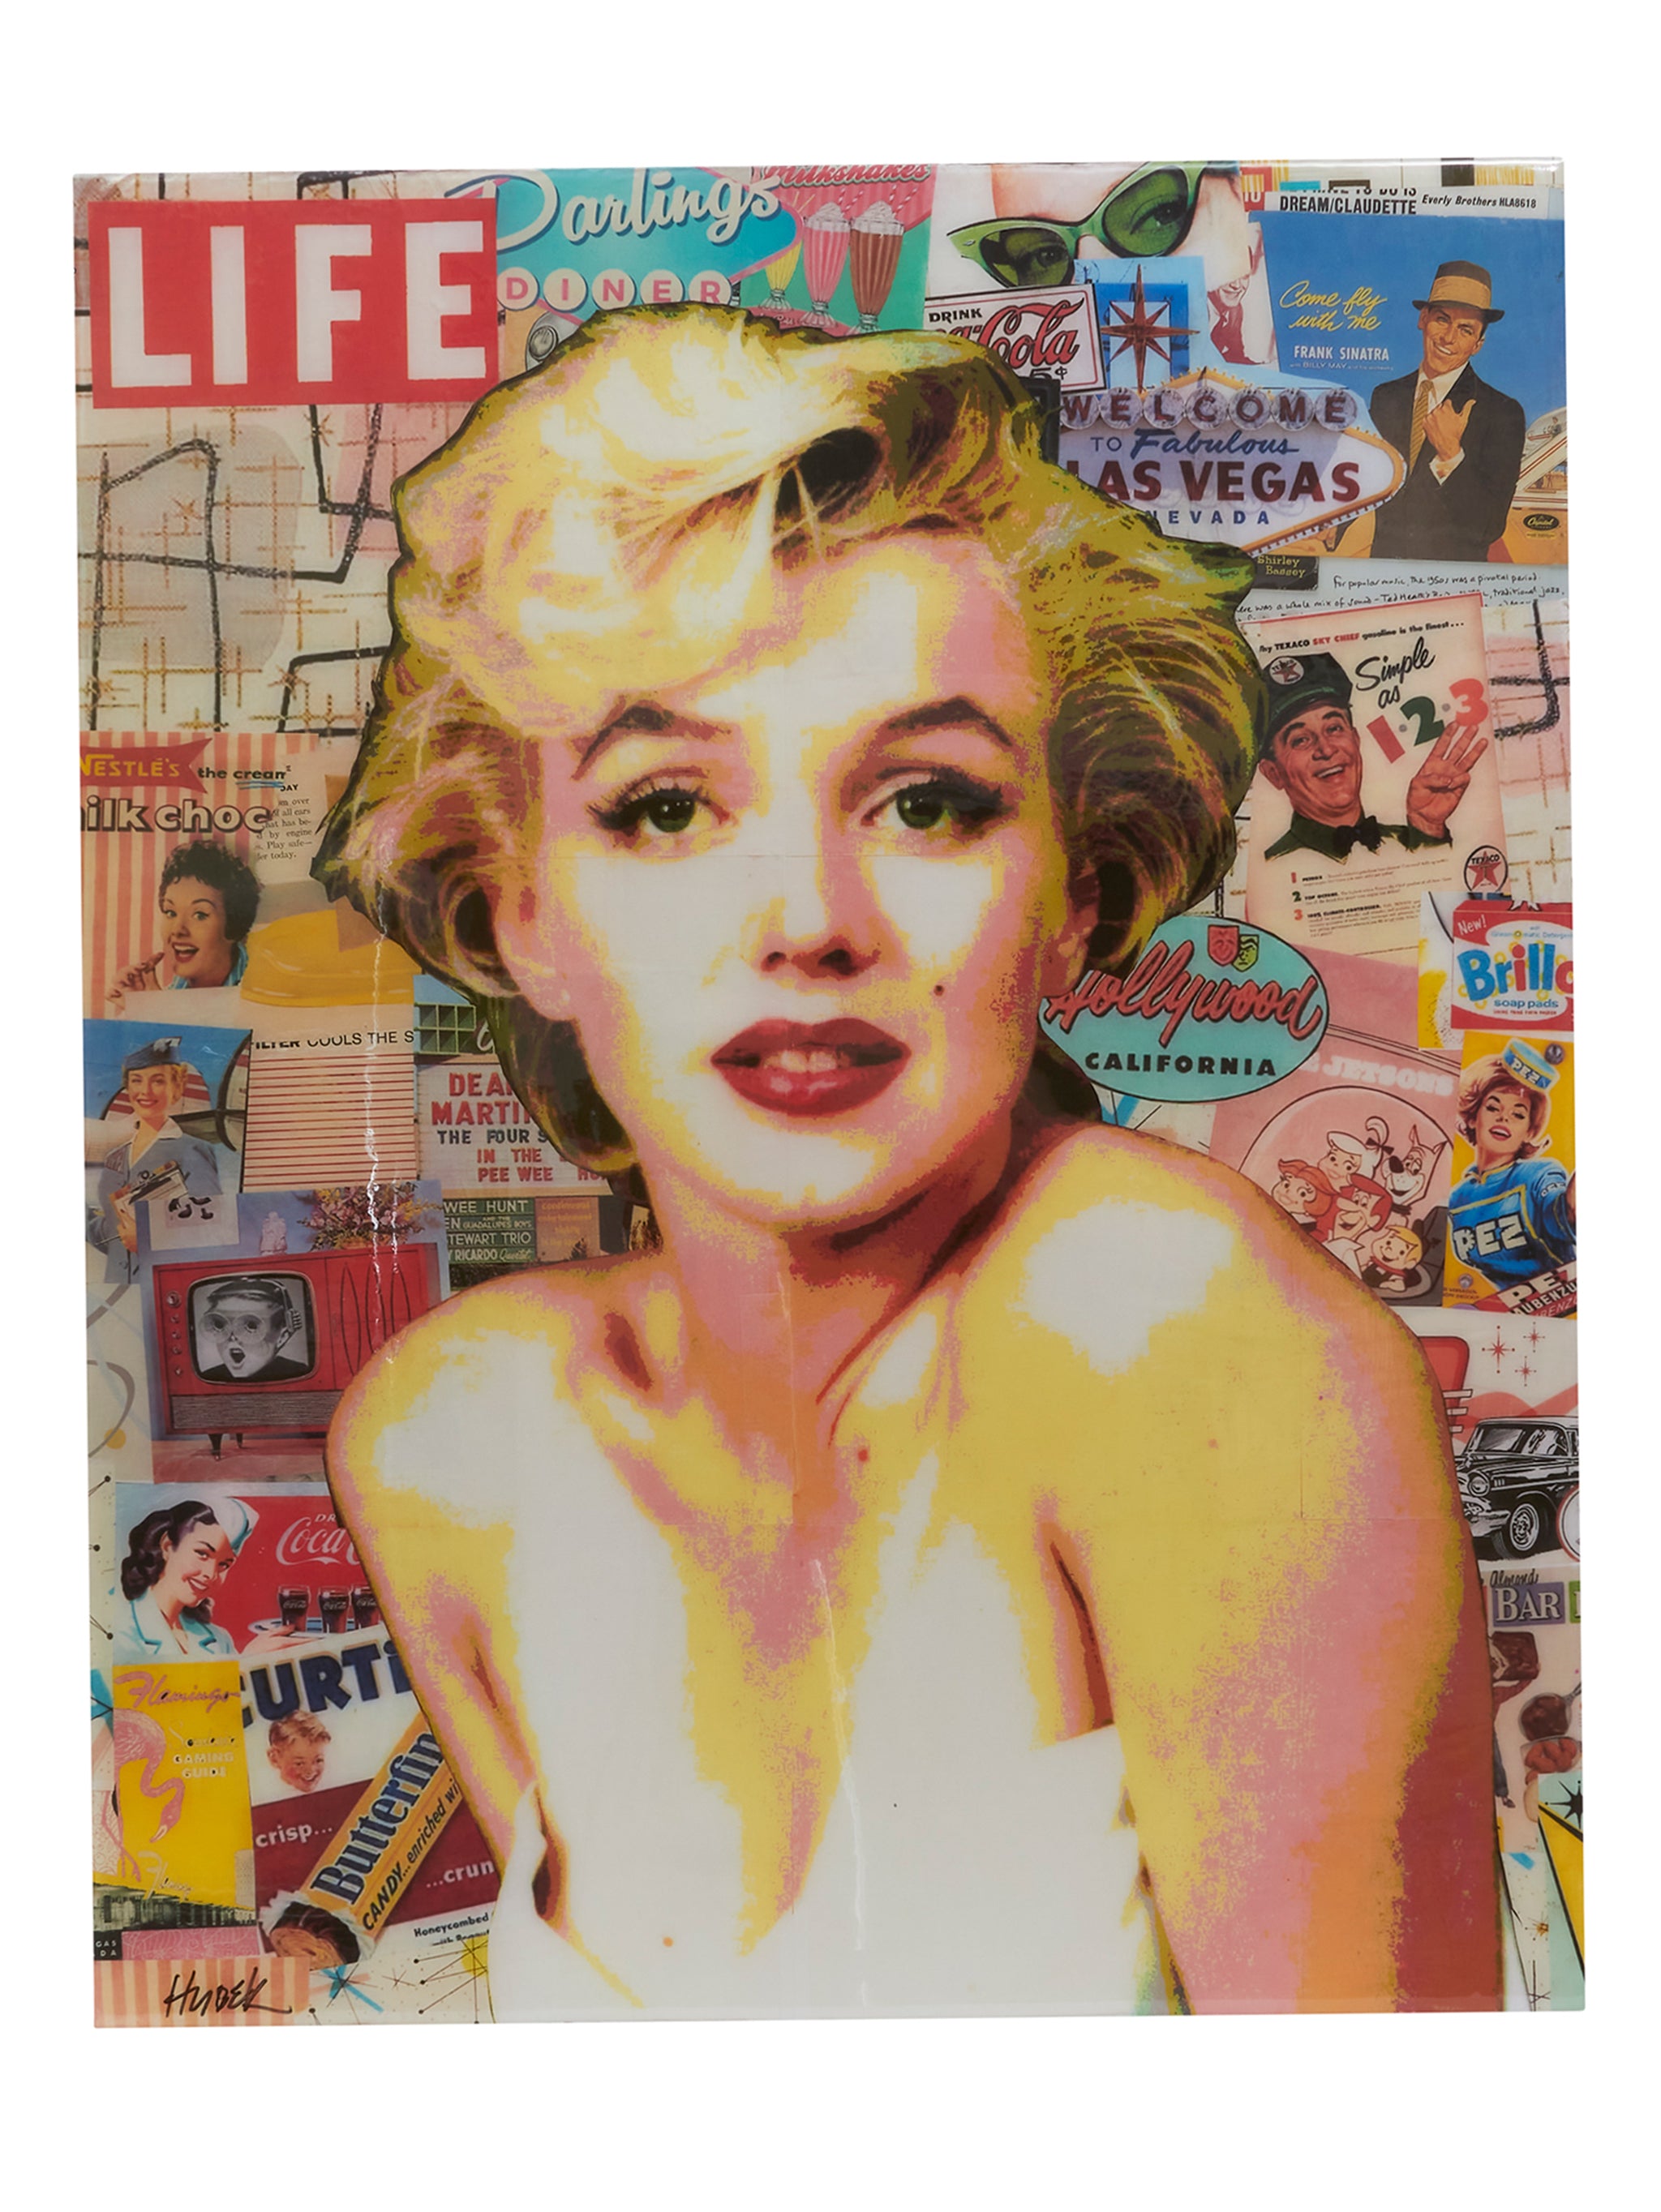 Marilyn Monroe in Stockings Star Poster